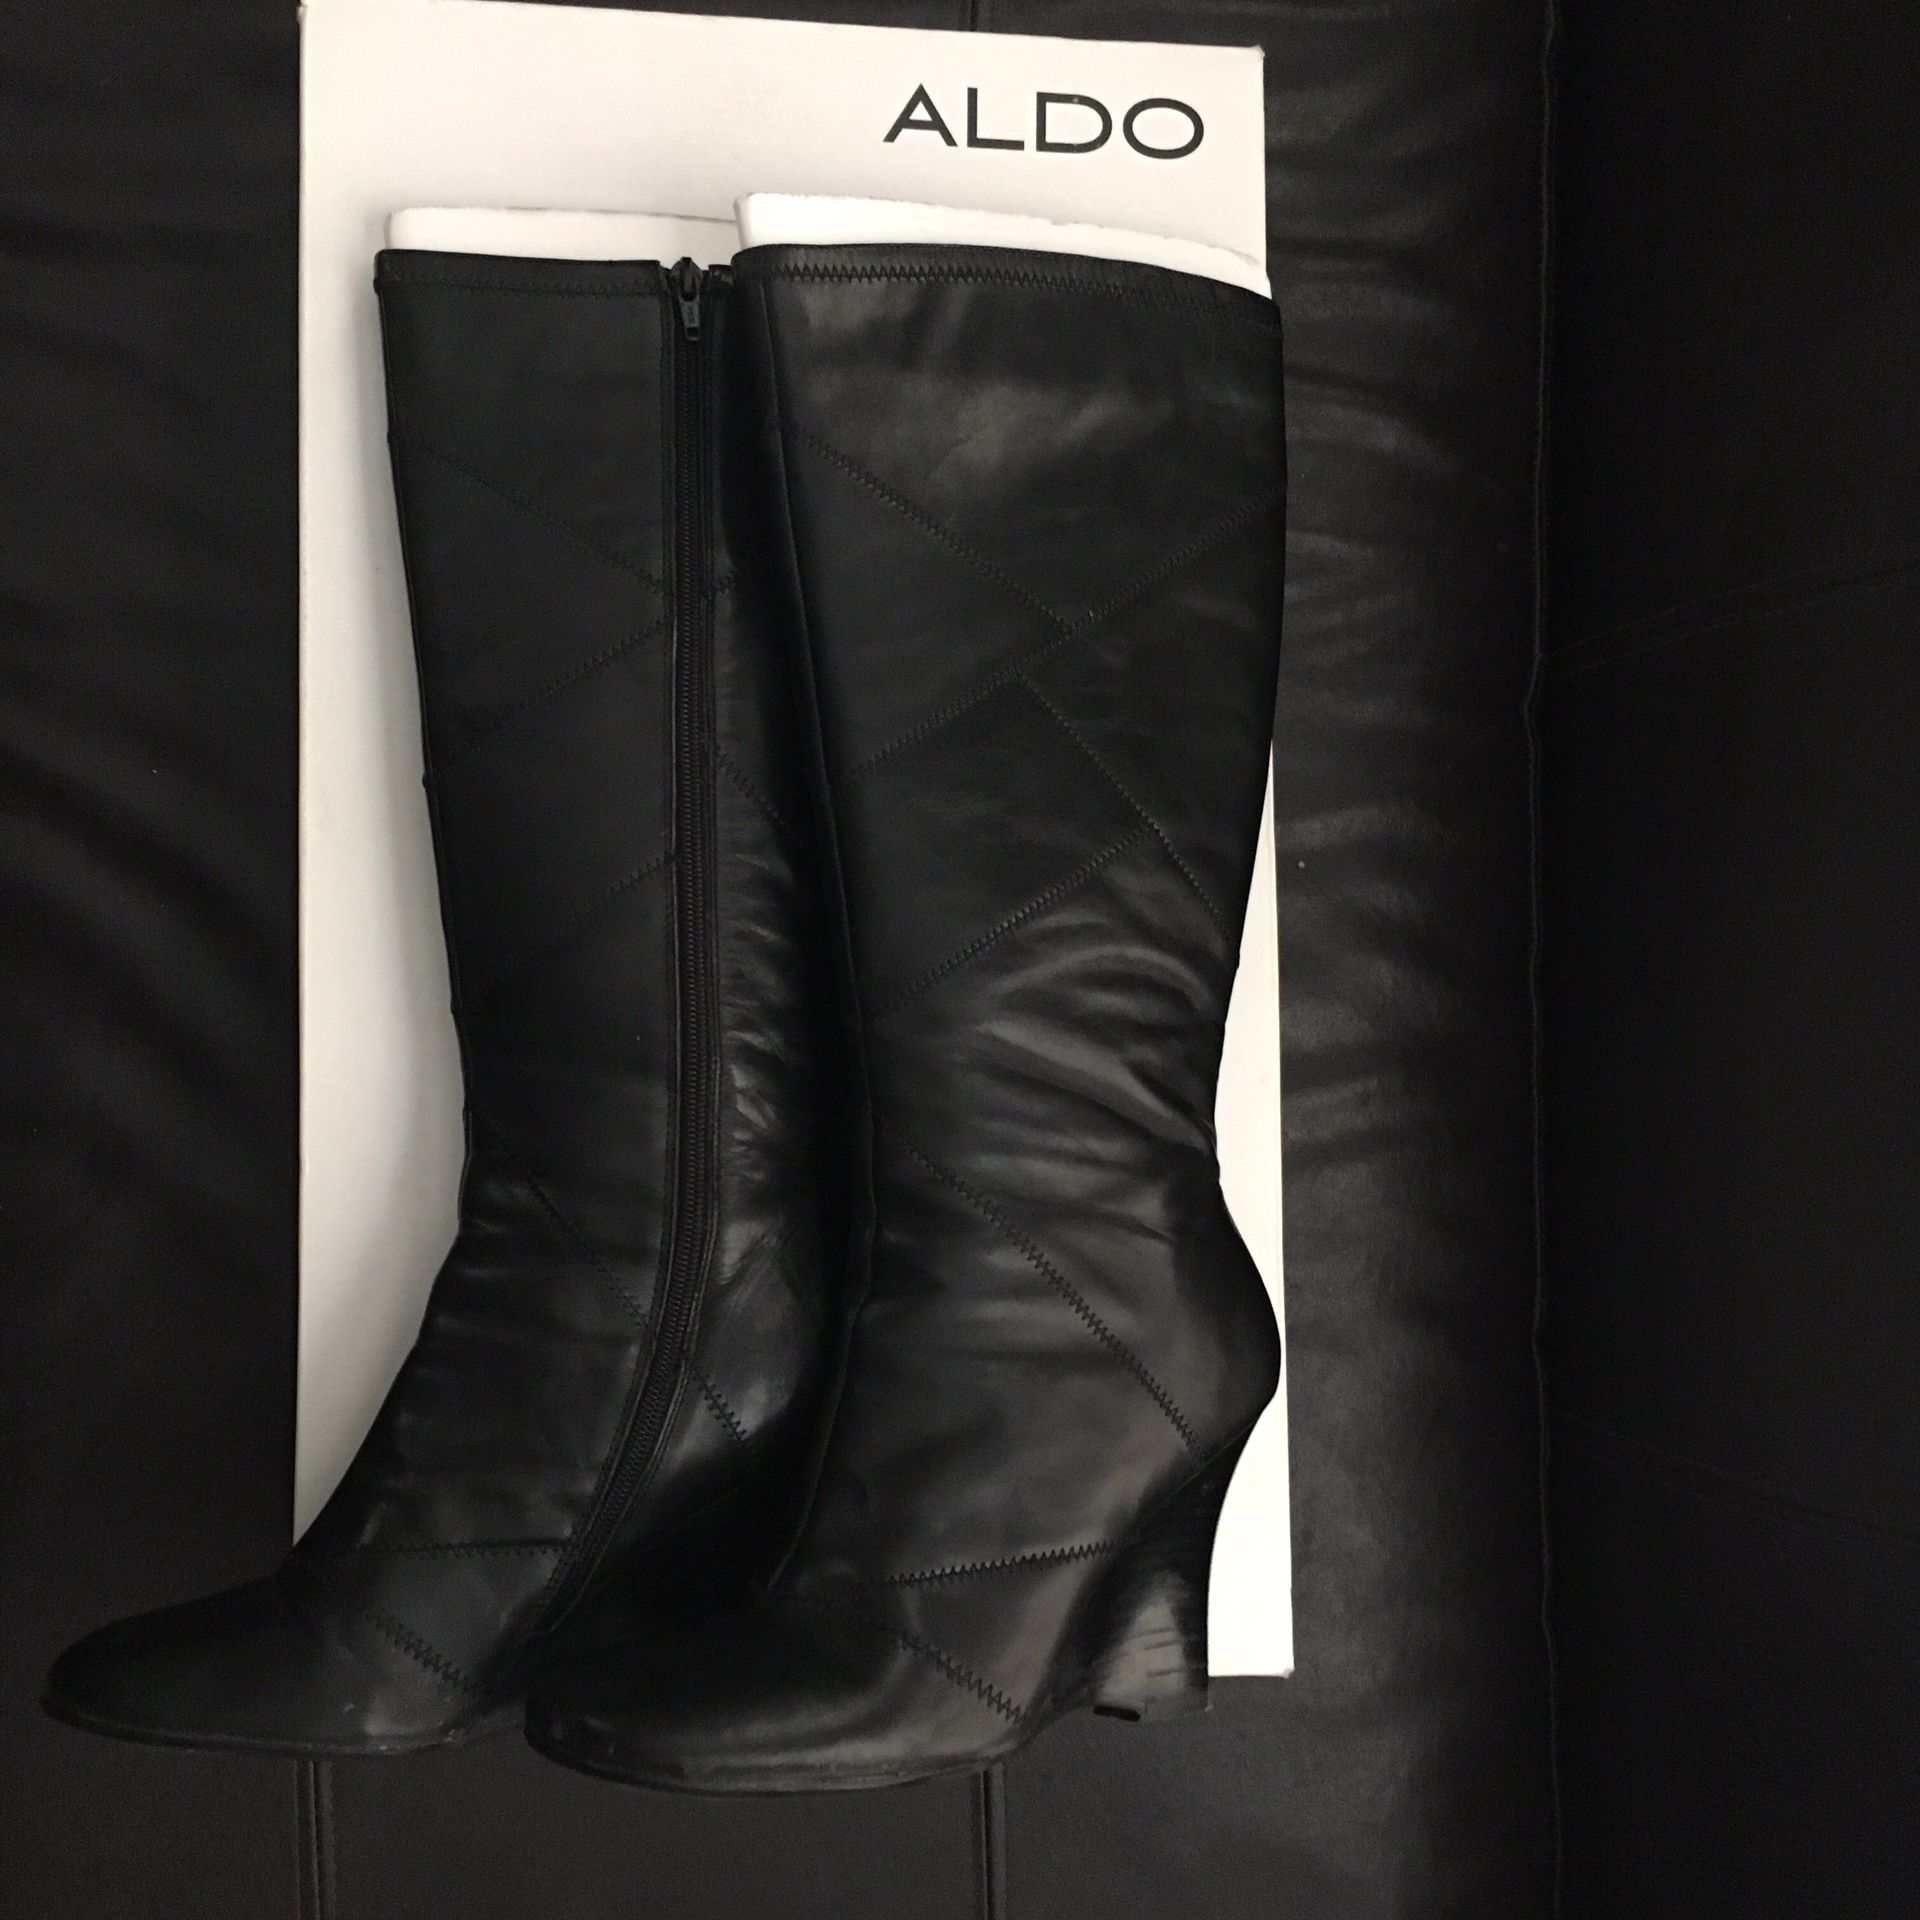 Aldo wedge knee high boots